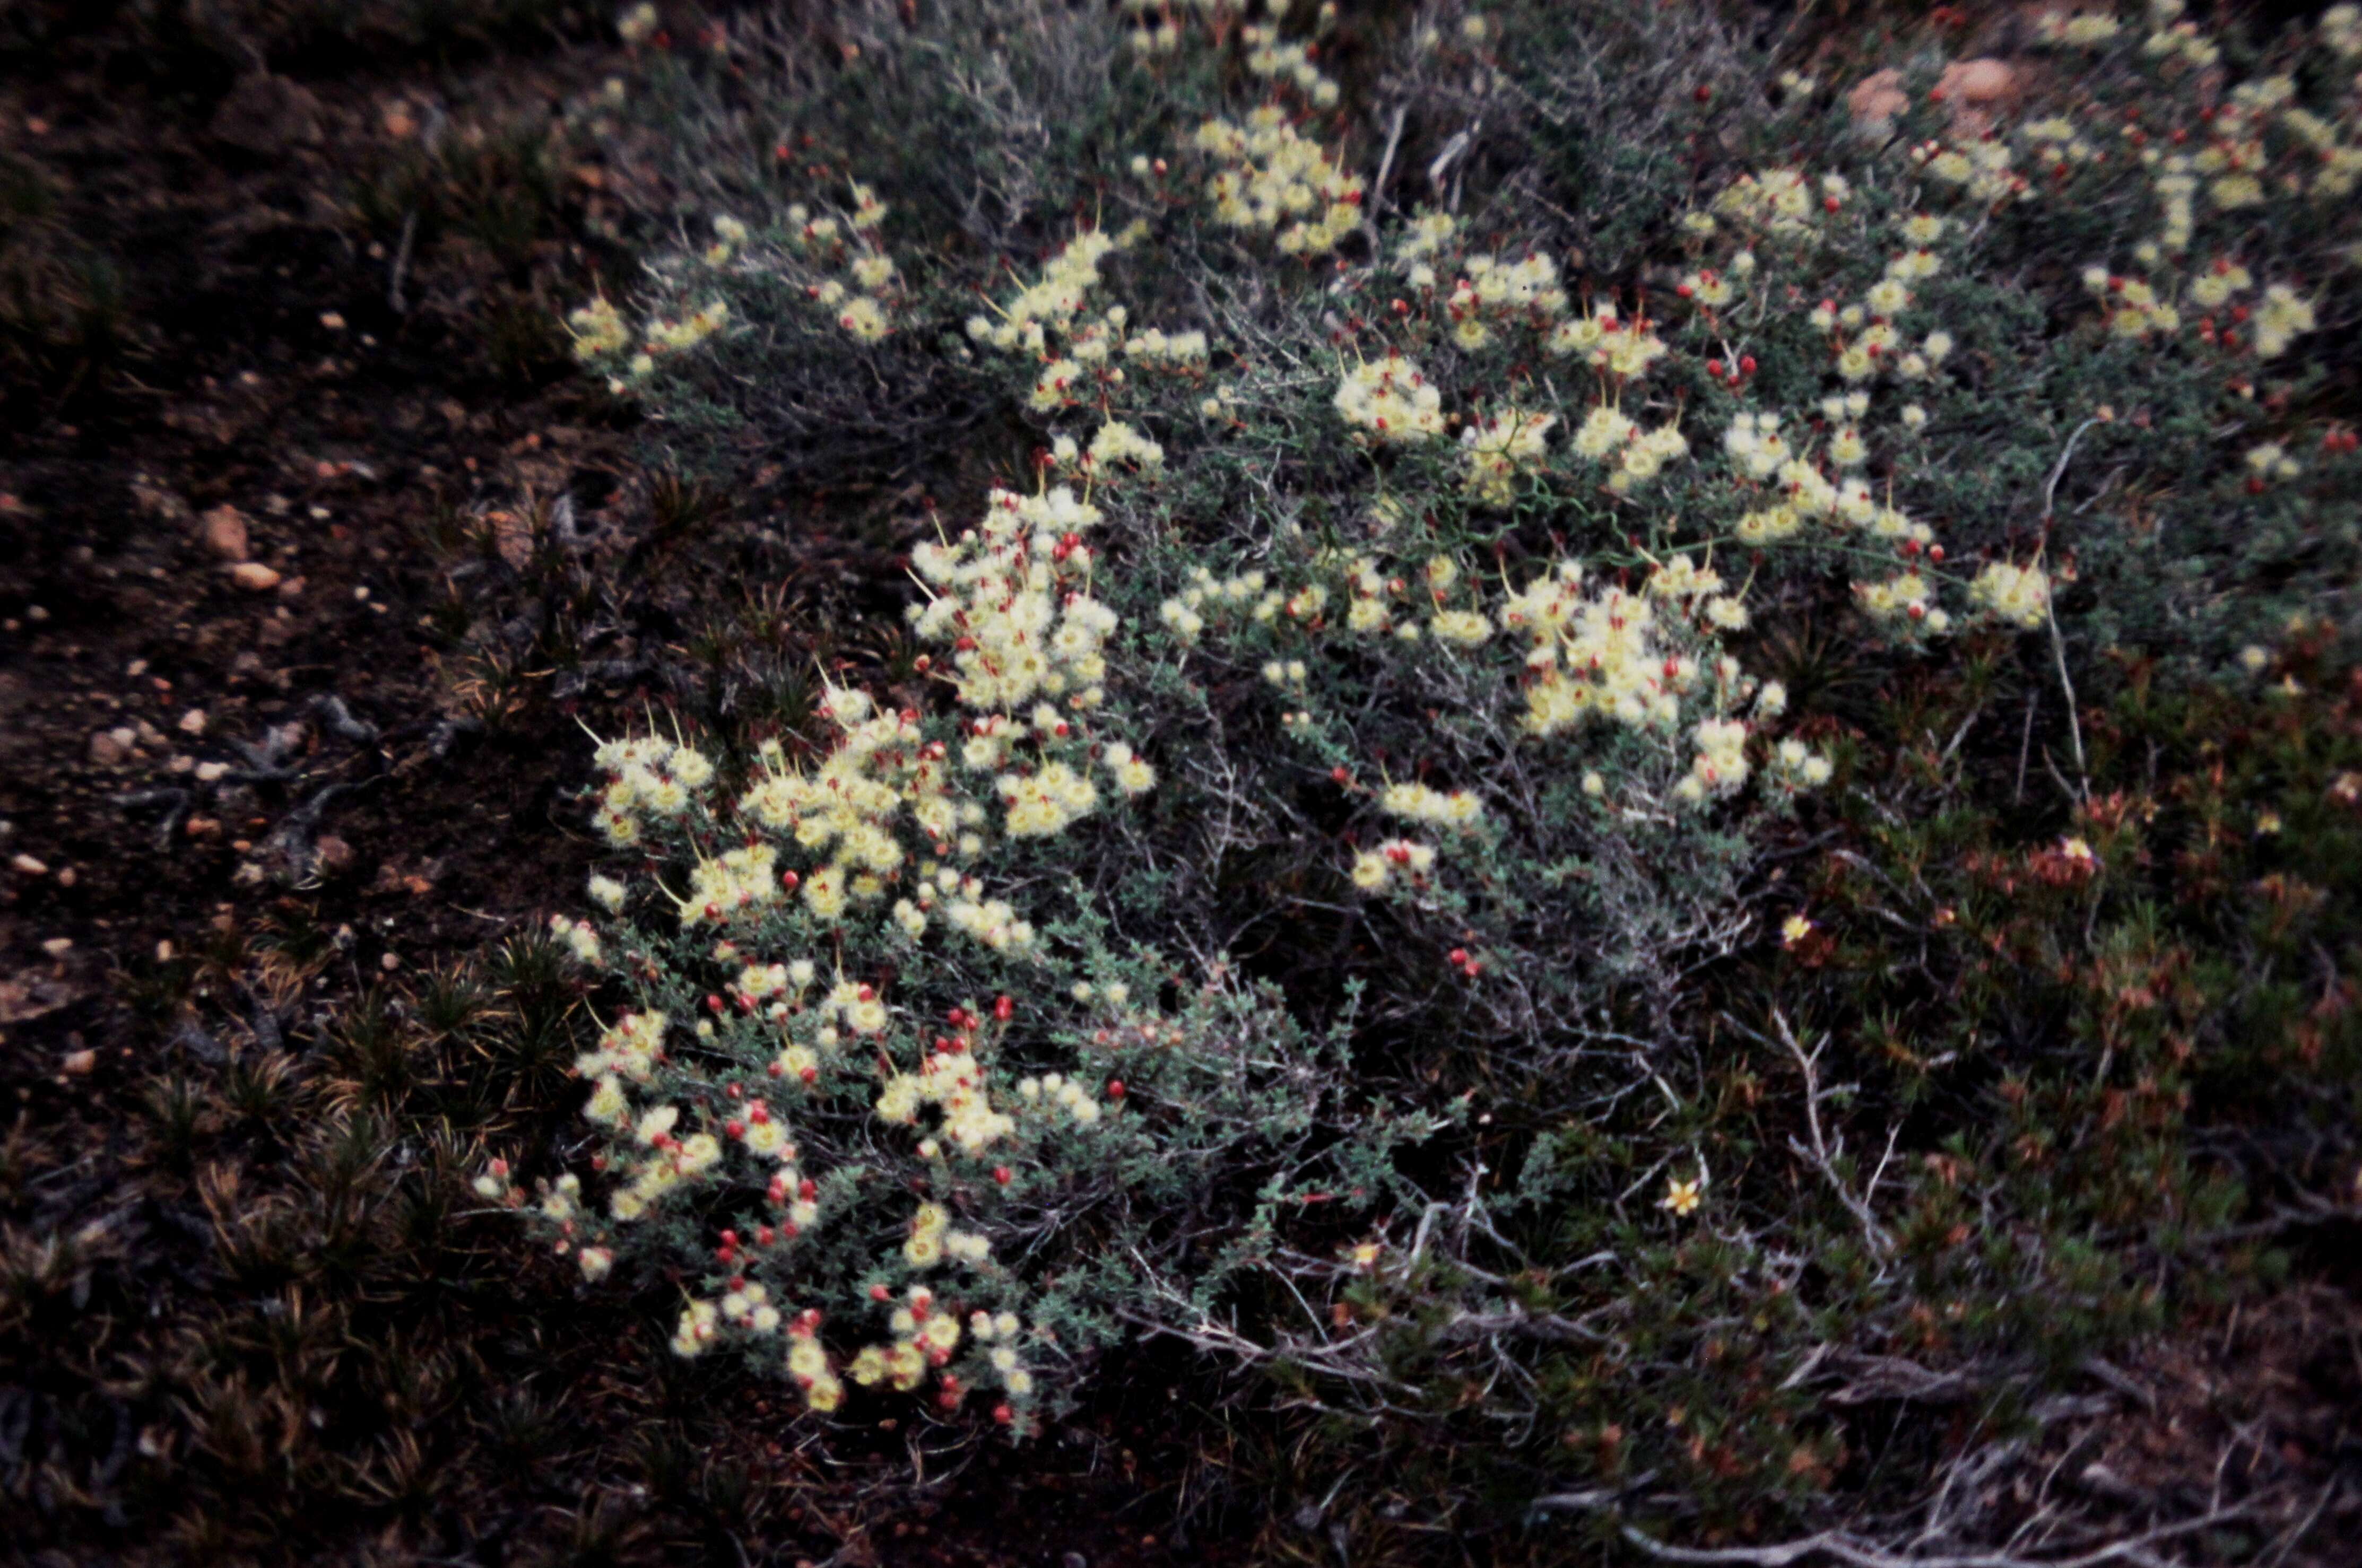 Image of Featherflowers